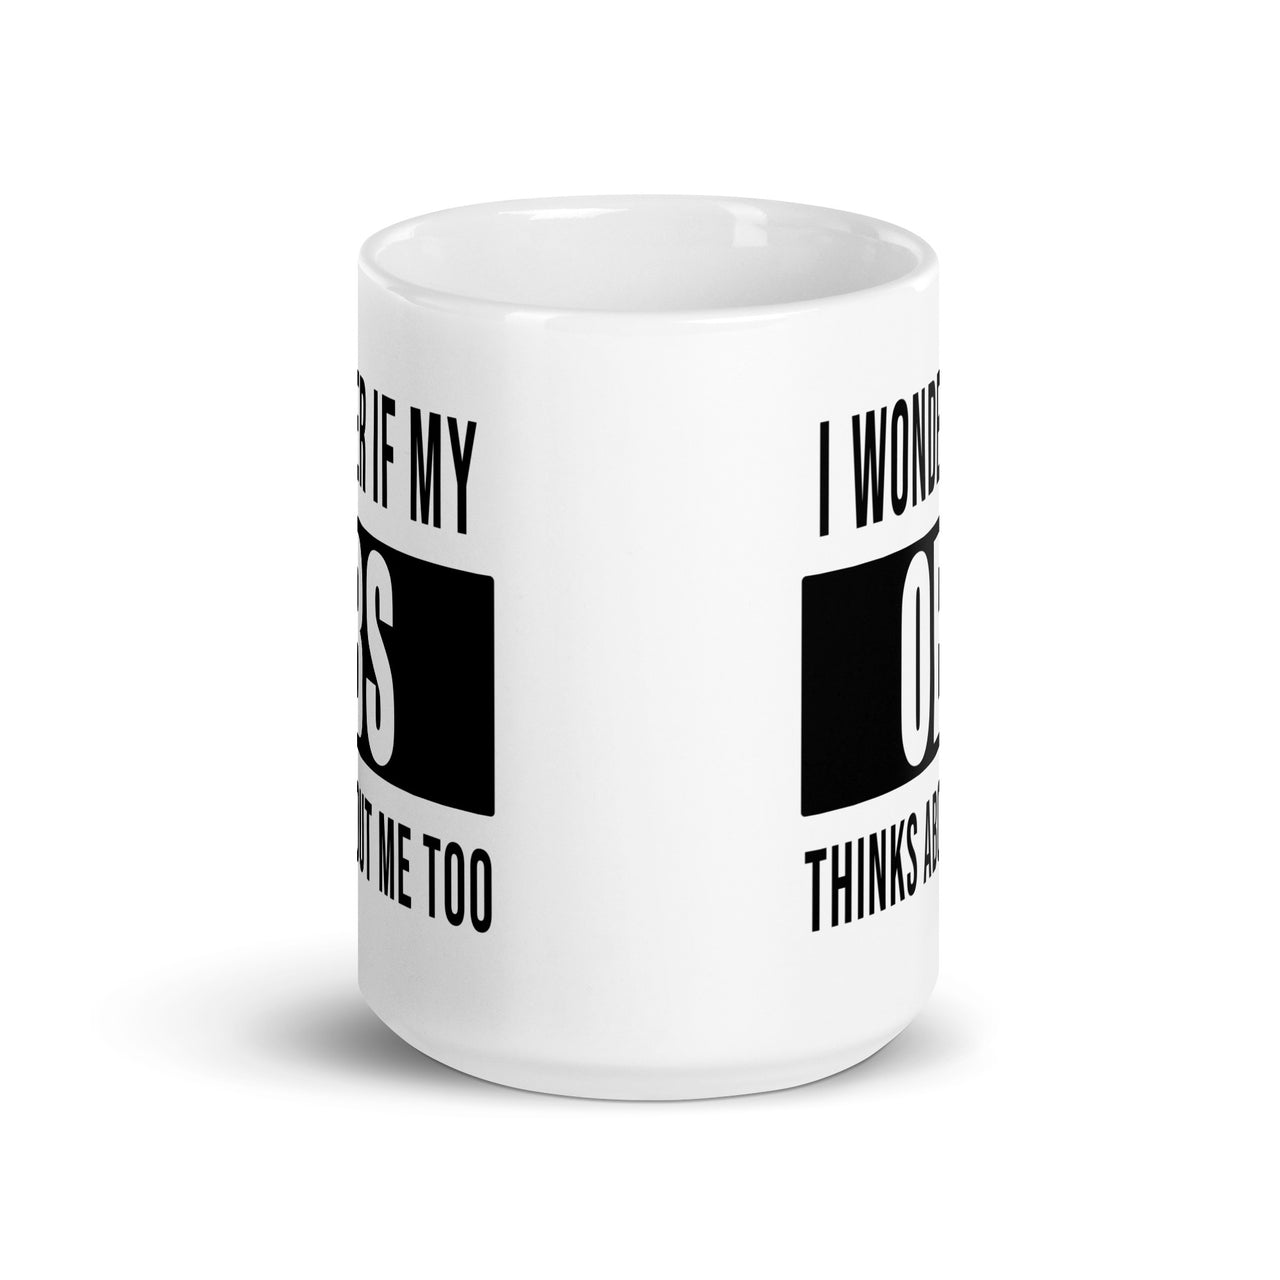 OBS Truck Coffee Mug cup